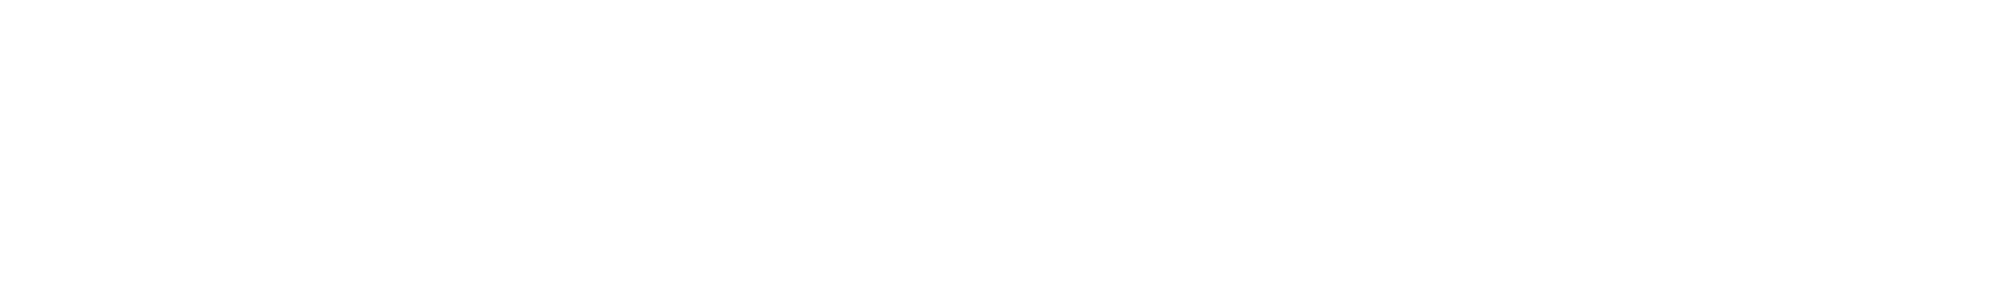 cisco-live-LP-logos